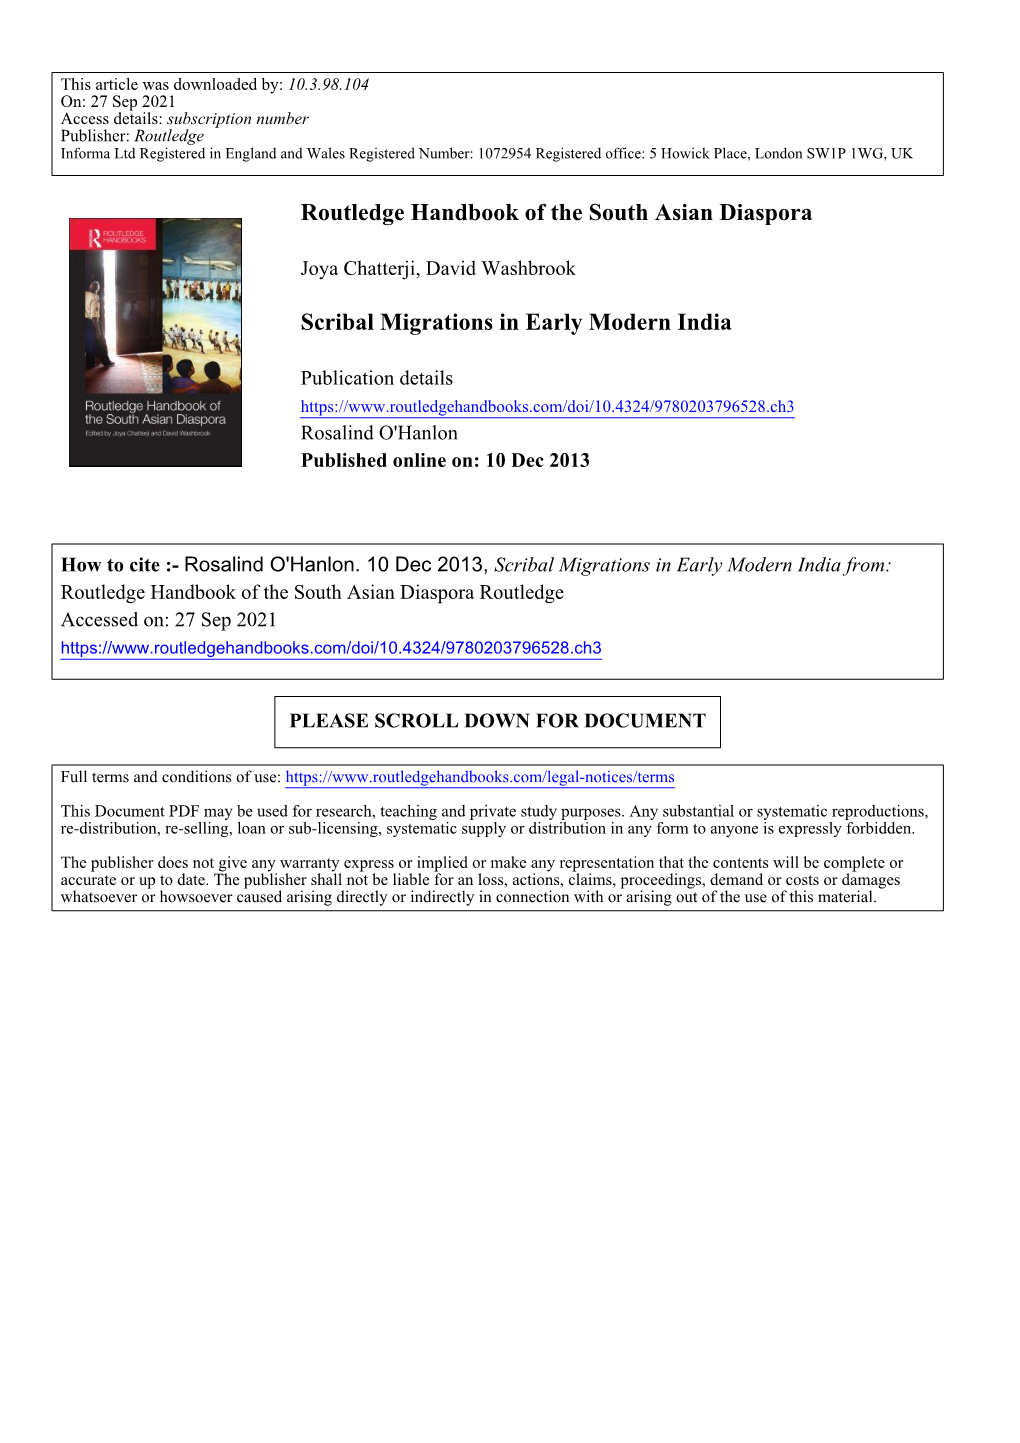 Routledge Handbook of the South Asian Diaspora Scribal Migrations